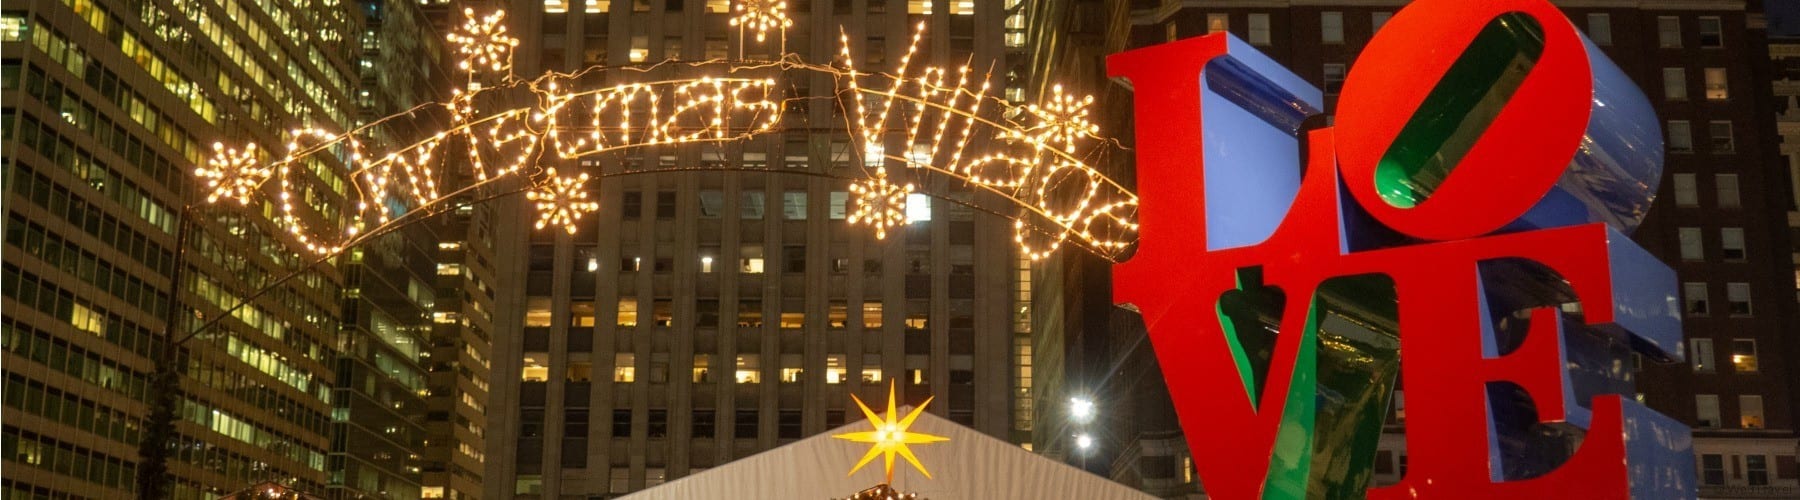 10 Special Ways to Celebrate Christmas in Philadelphia